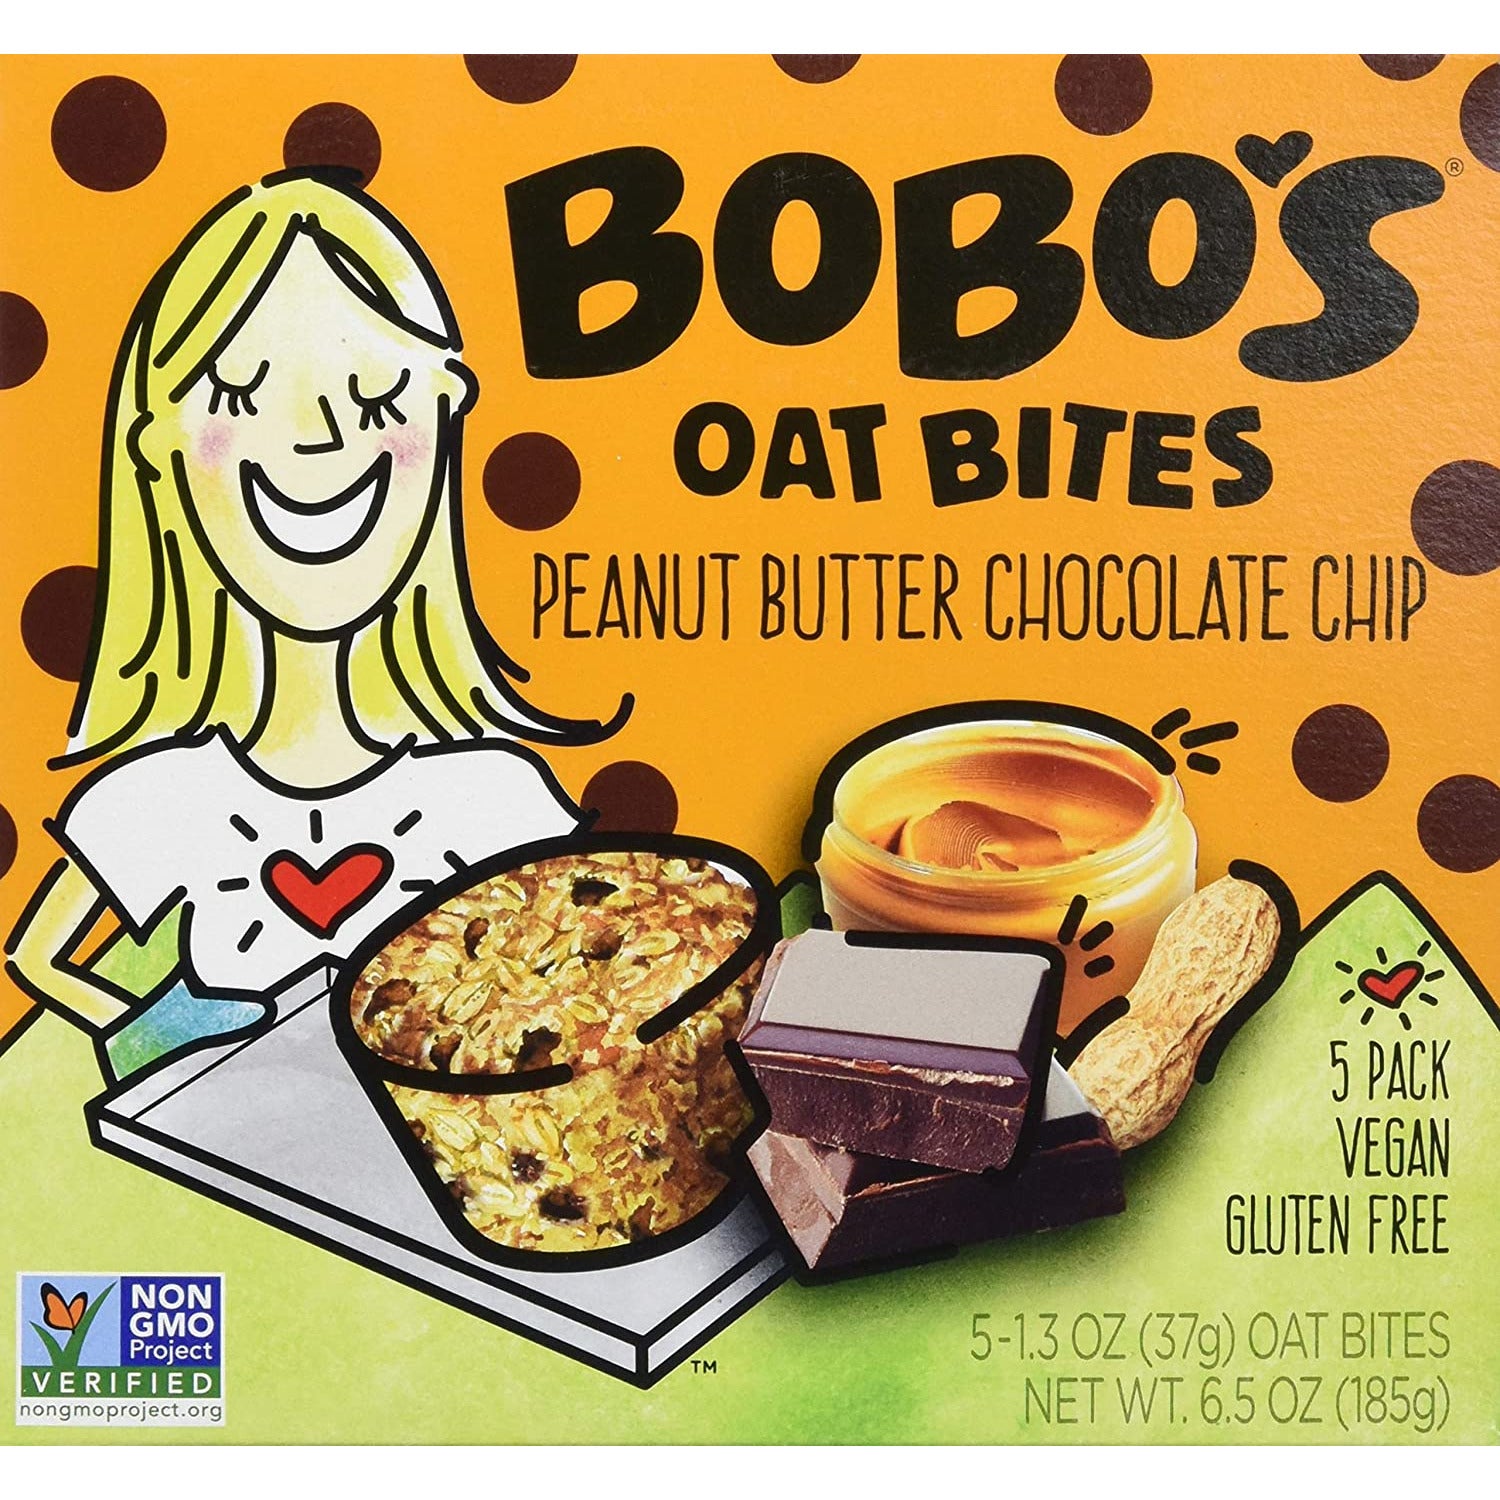 BOBOS OAT BARS Peanut Butter Chocolate Chip Oat Bites, 1.3 OZ